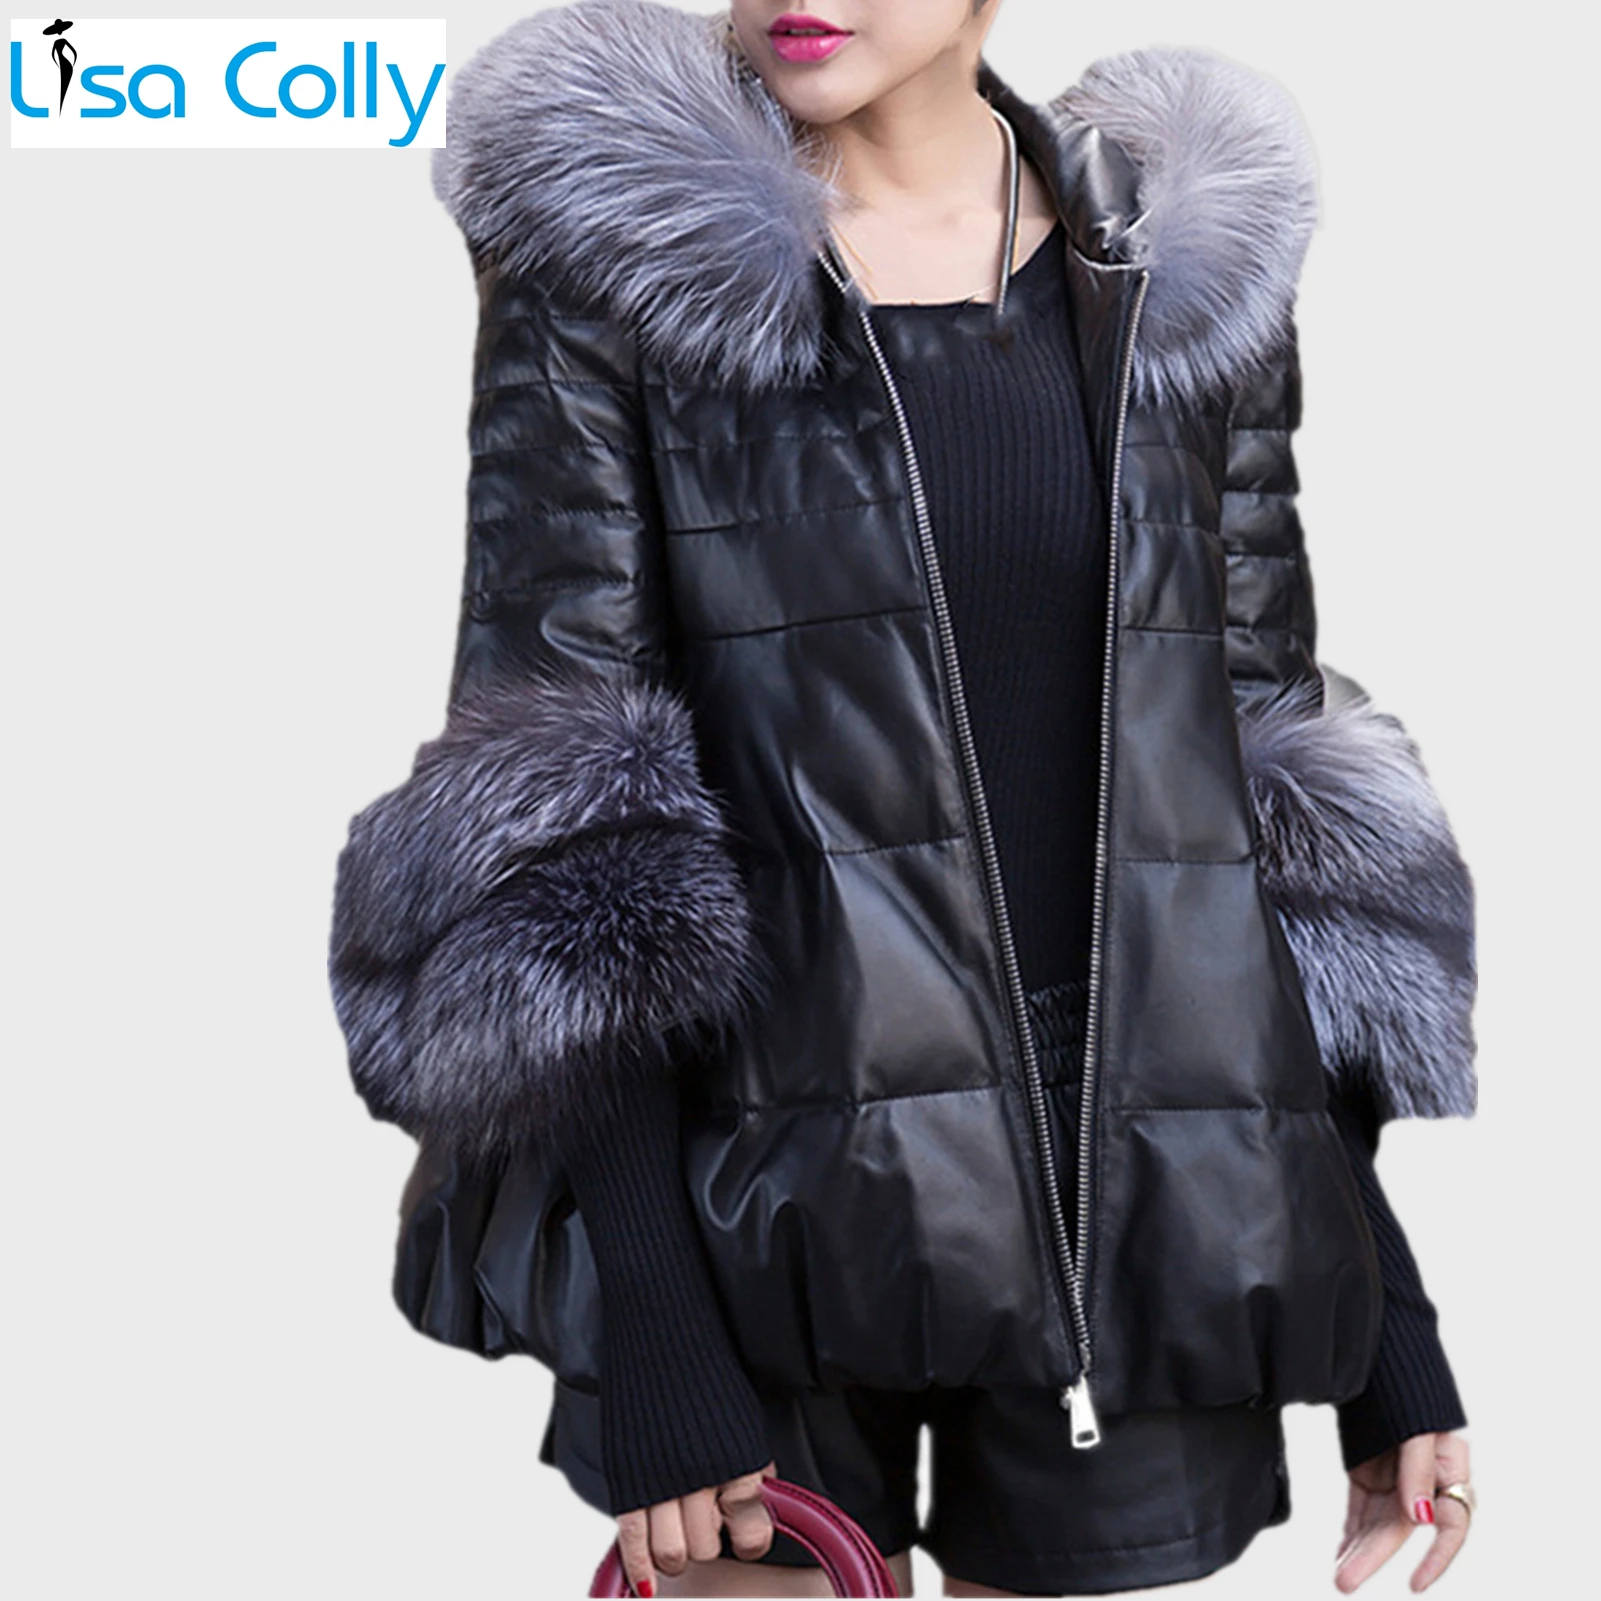 Lisa Colly Women Faux Fur Coat Jacket Autumn Winter Black Overcoat Women Warm Furs Coat Jackets